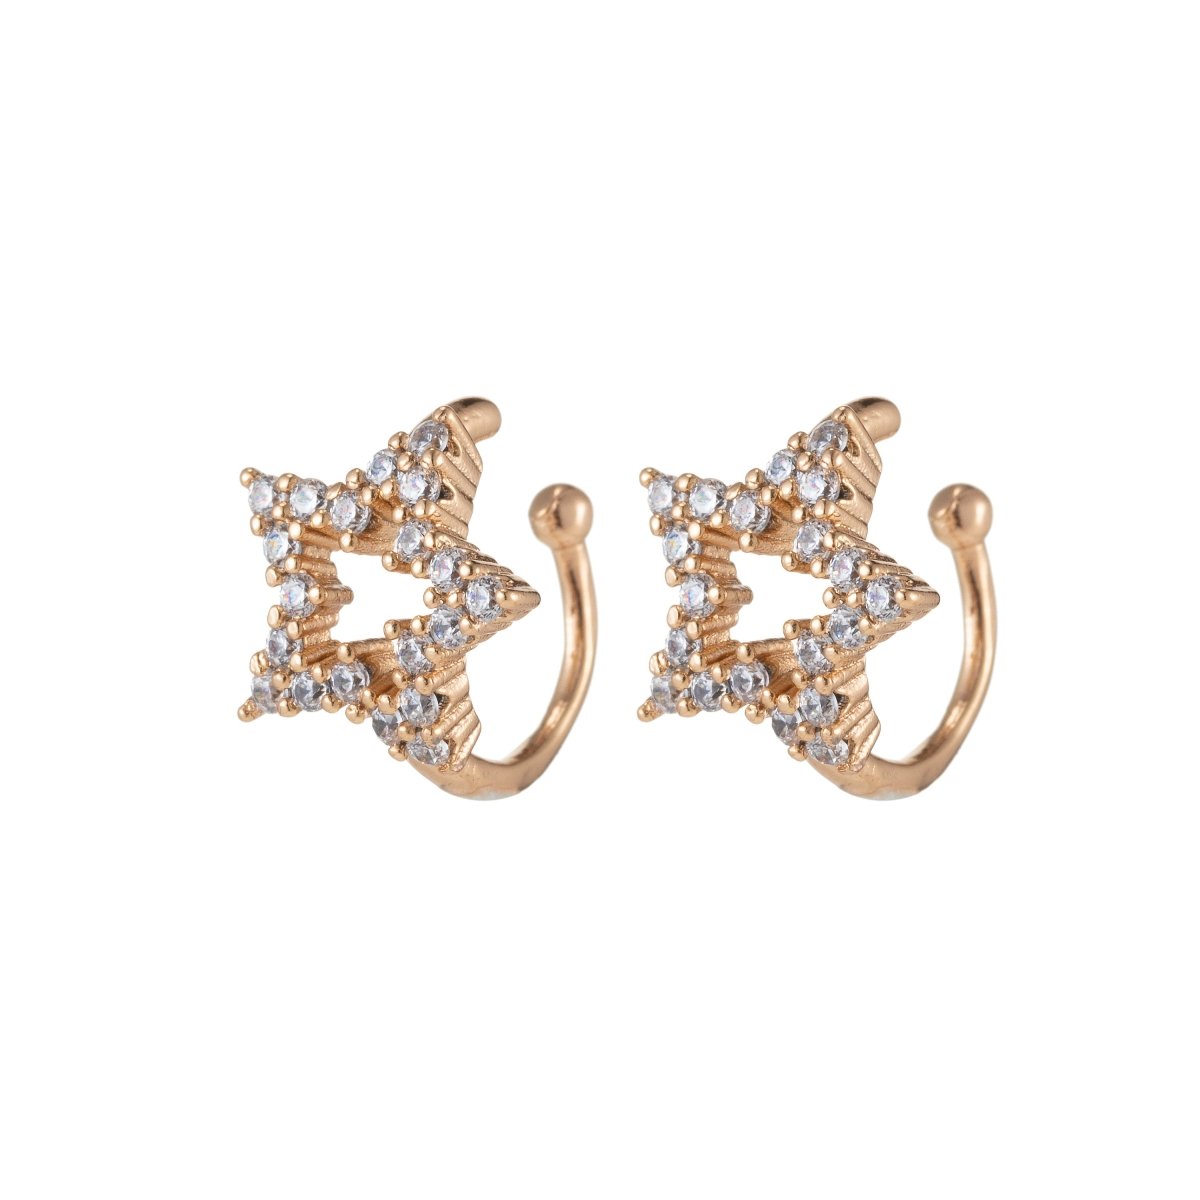 Gold Sparkling CZ Star Cuff Earrings for Women Clip On Ears No Piercing Cartilage Earrings AI-053 - DLUXCA